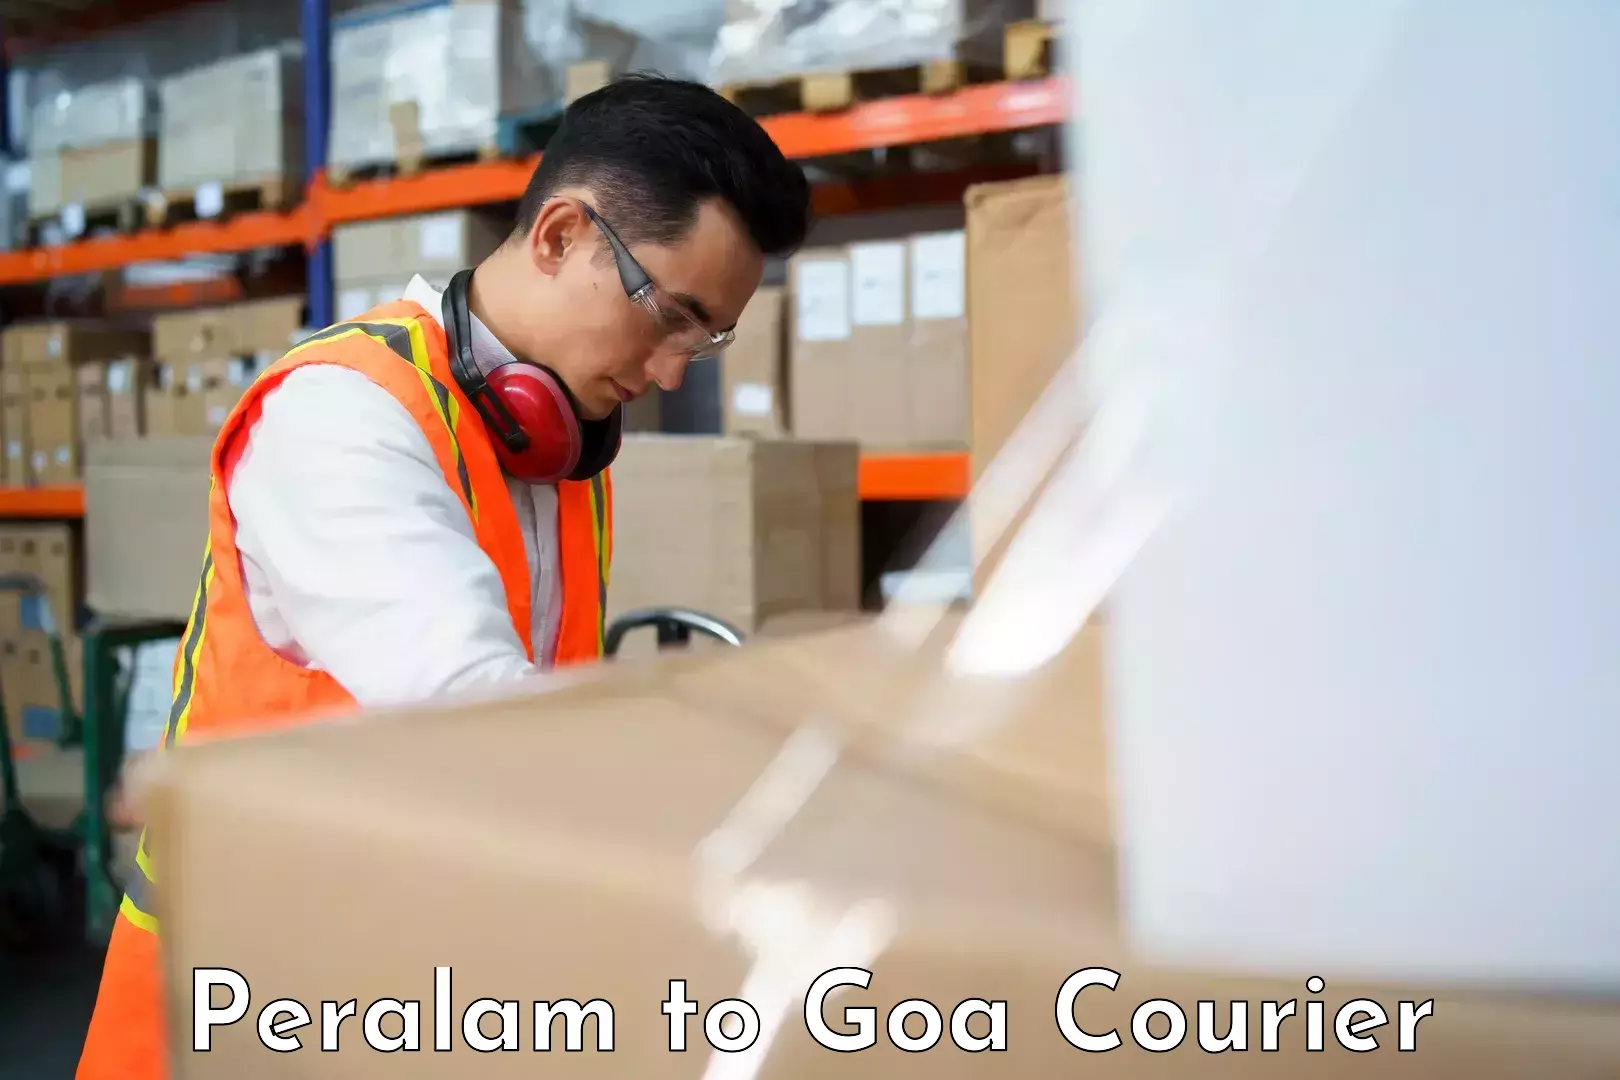 Professional moving company Peralam to South Goa